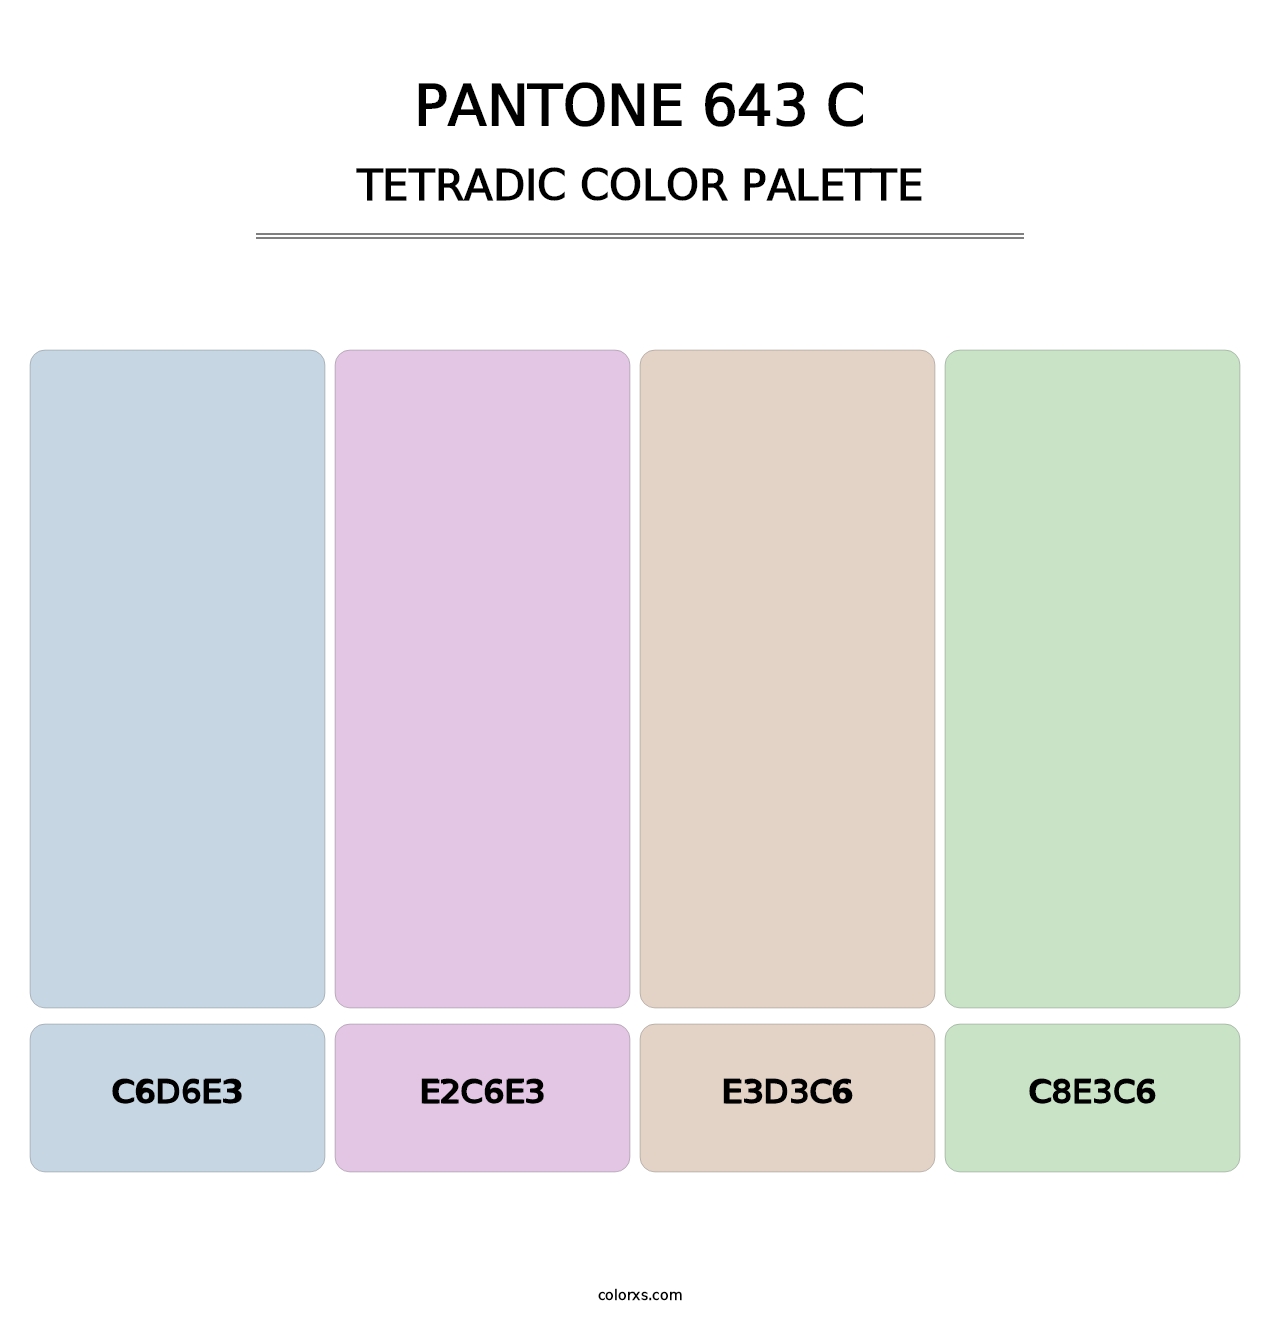 PANTONE 643 C - Tetradic Color Palette